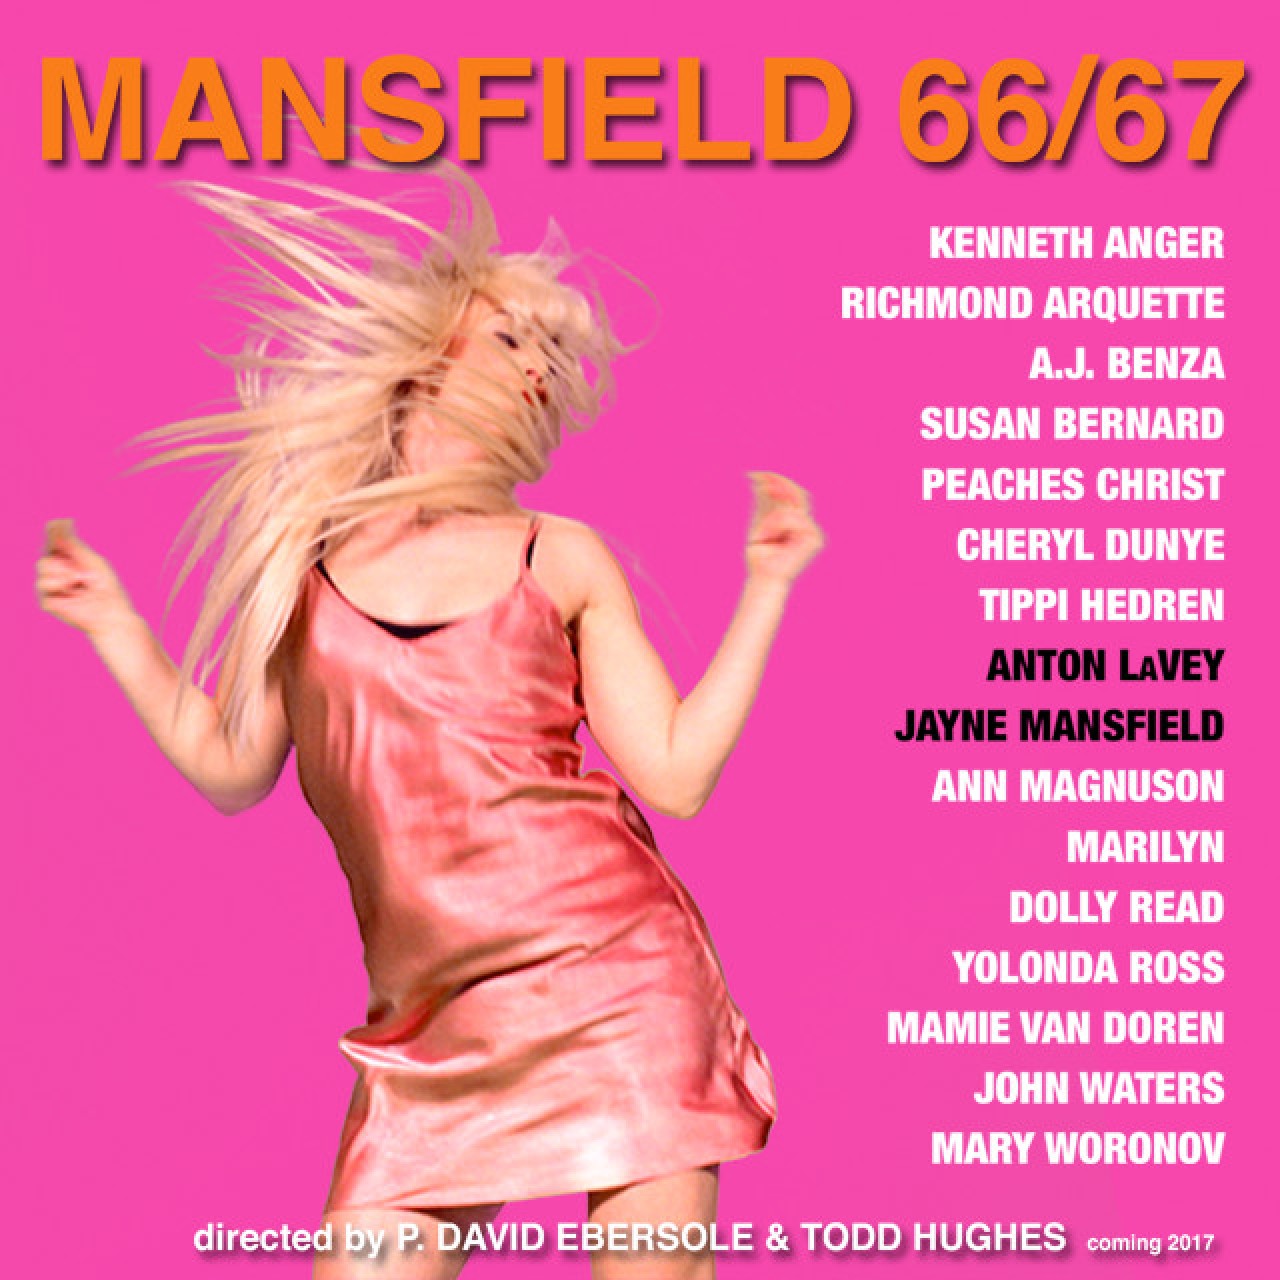 Mansfield 66/67 - 1